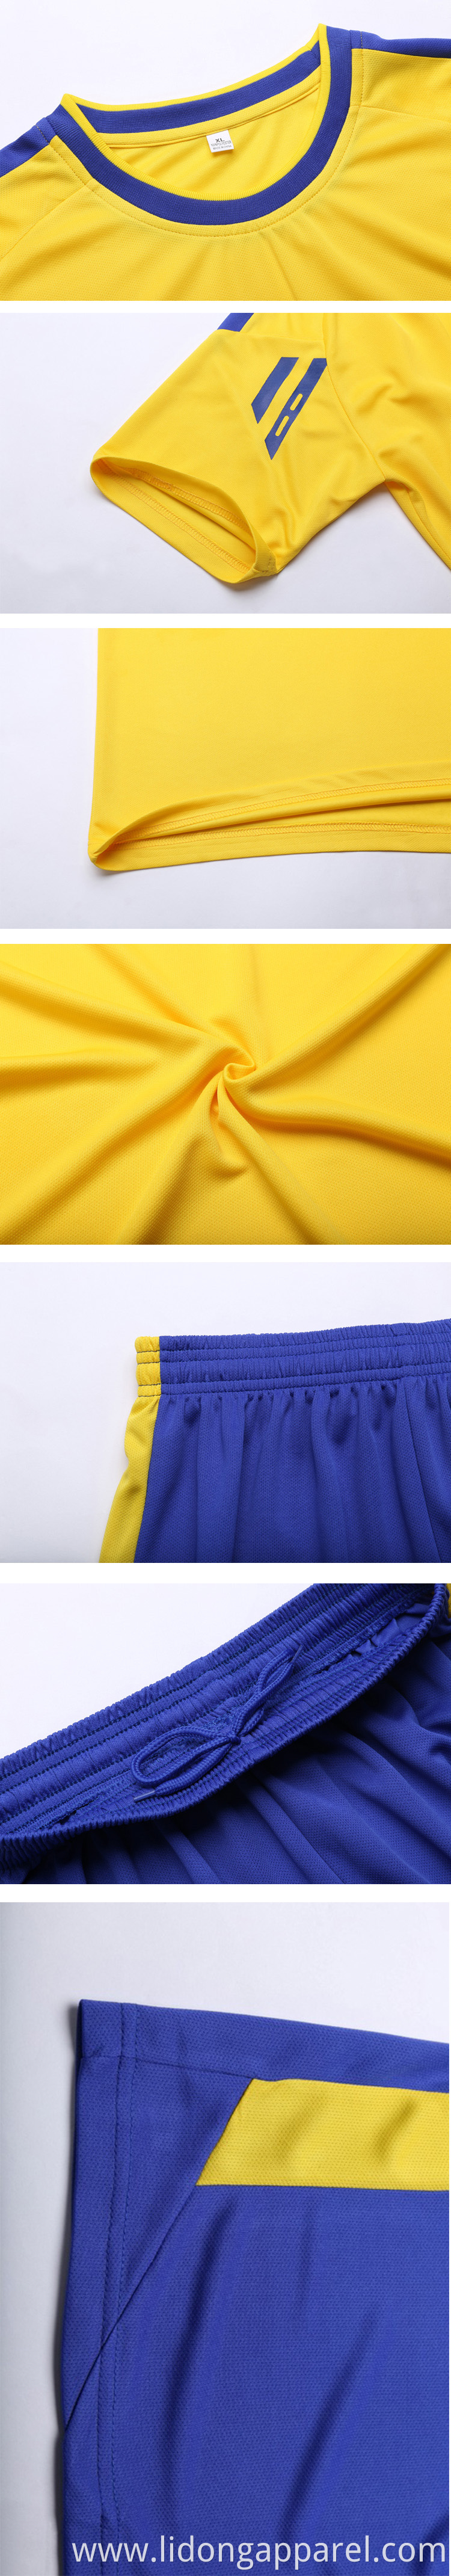 Mens Kit Wholesale Blank Football Jerseys Custom Soccer Uniforms Italy Football Shirt with Low Price